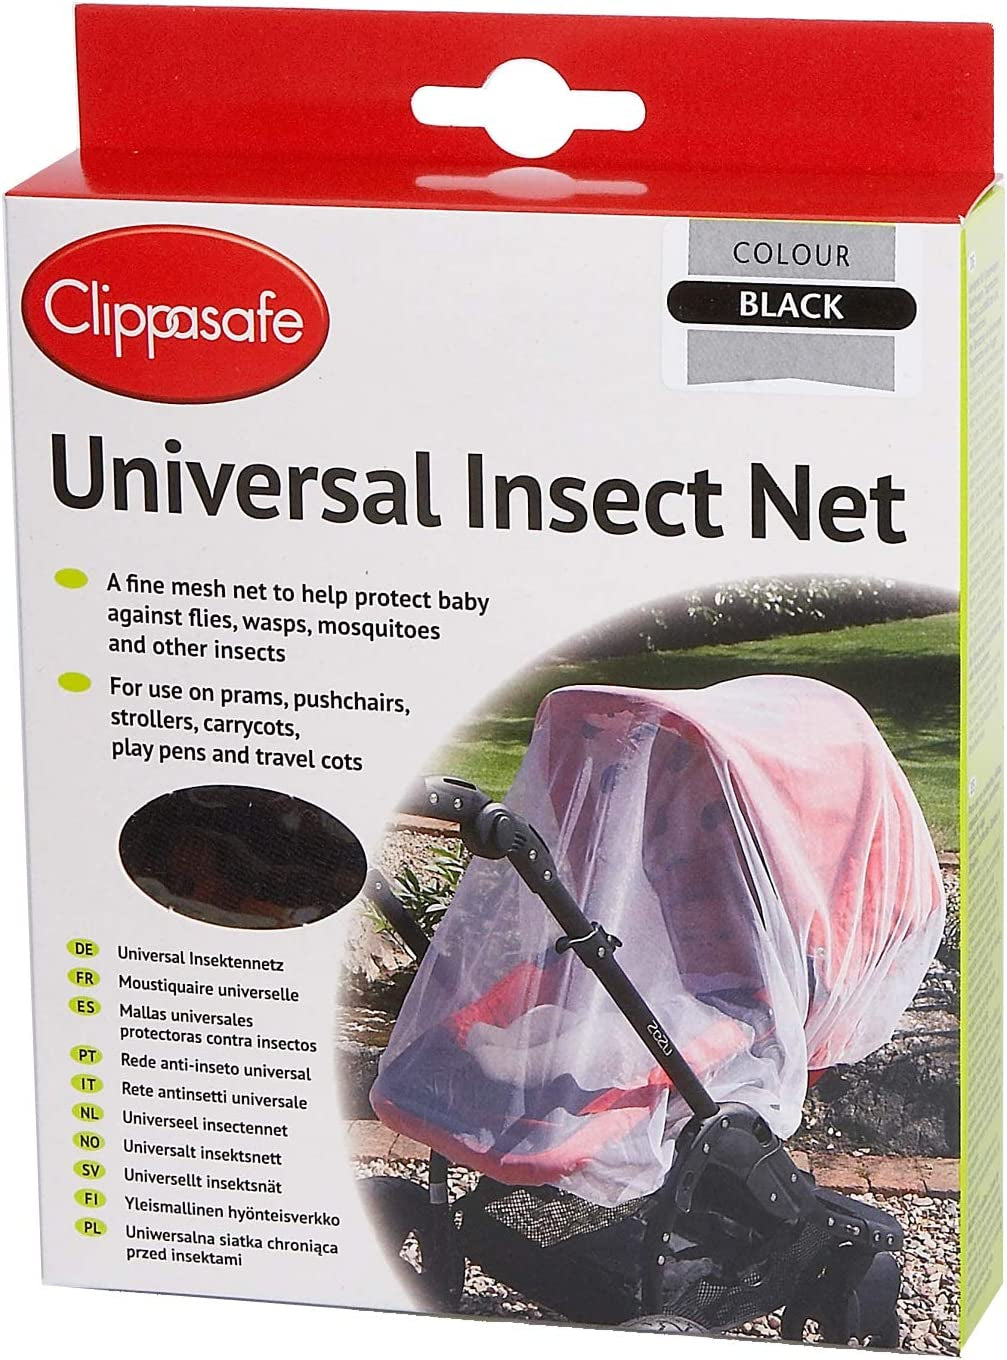 Clippasafe Pram & Pushchair Universal Insect Net (One Size, White)